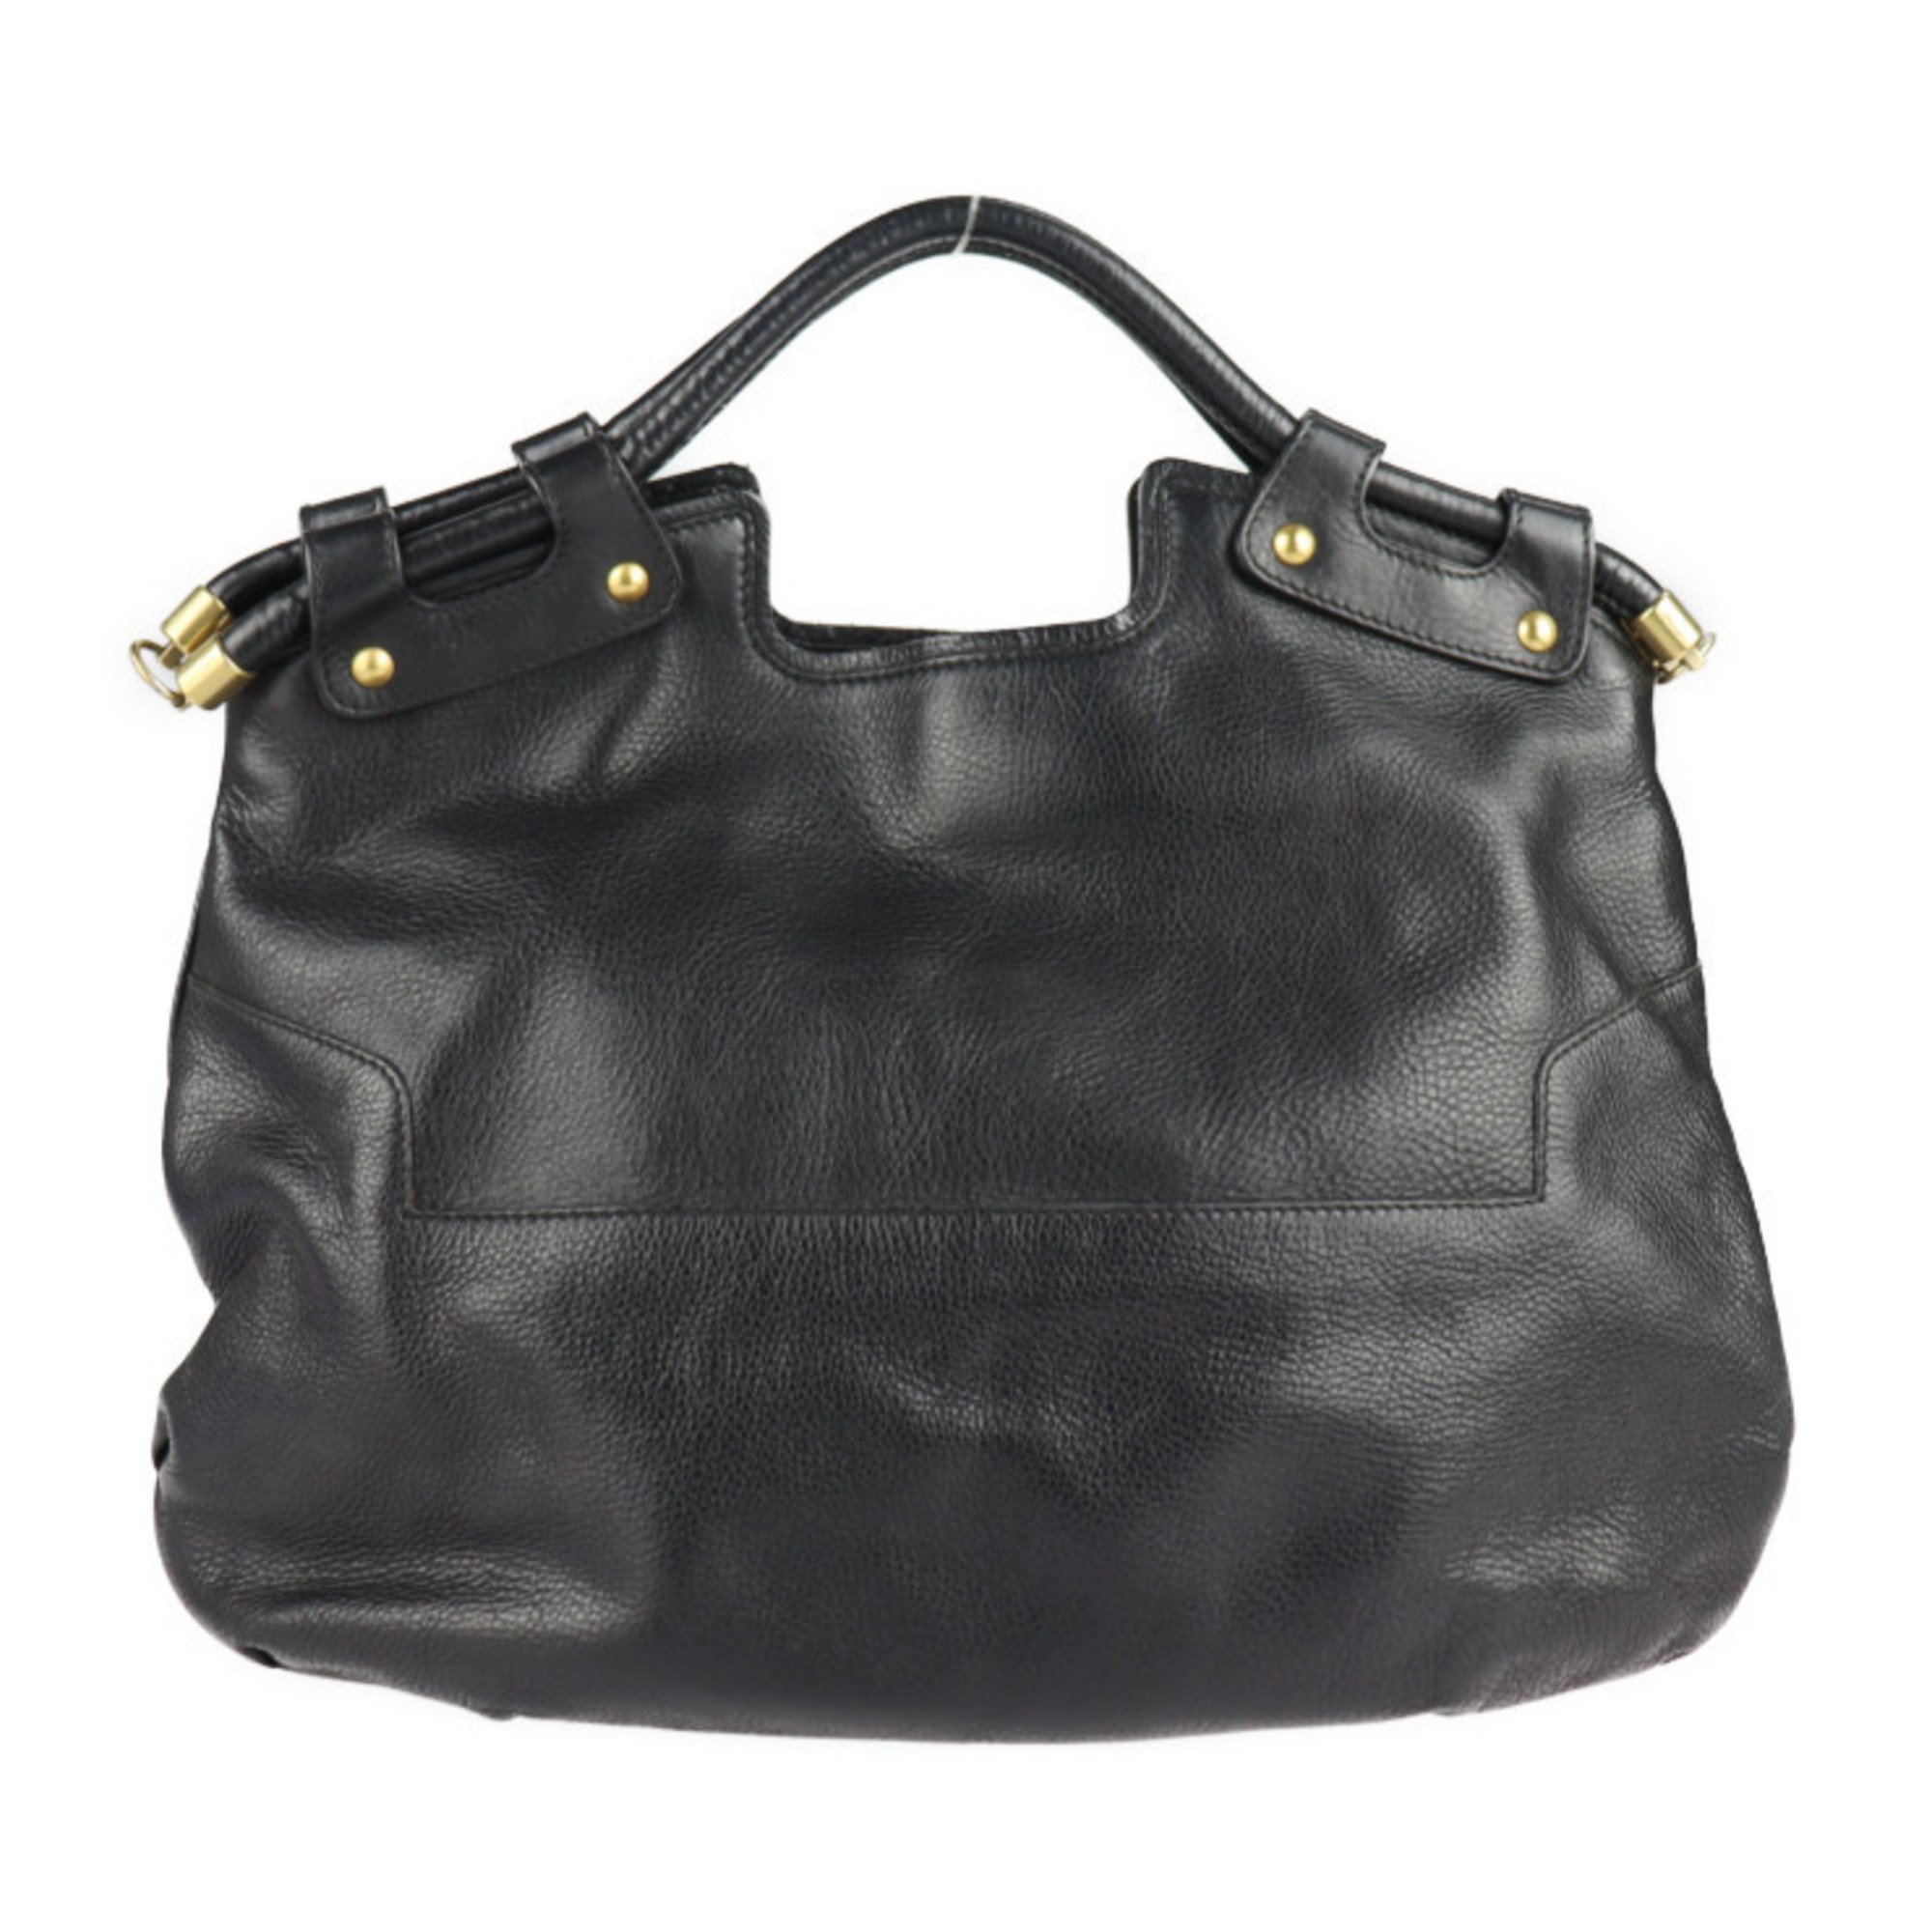 Salvatore Ferragamo handbag 21 6829 leather black gold metal fittings 2WAY shoulder bag tassel